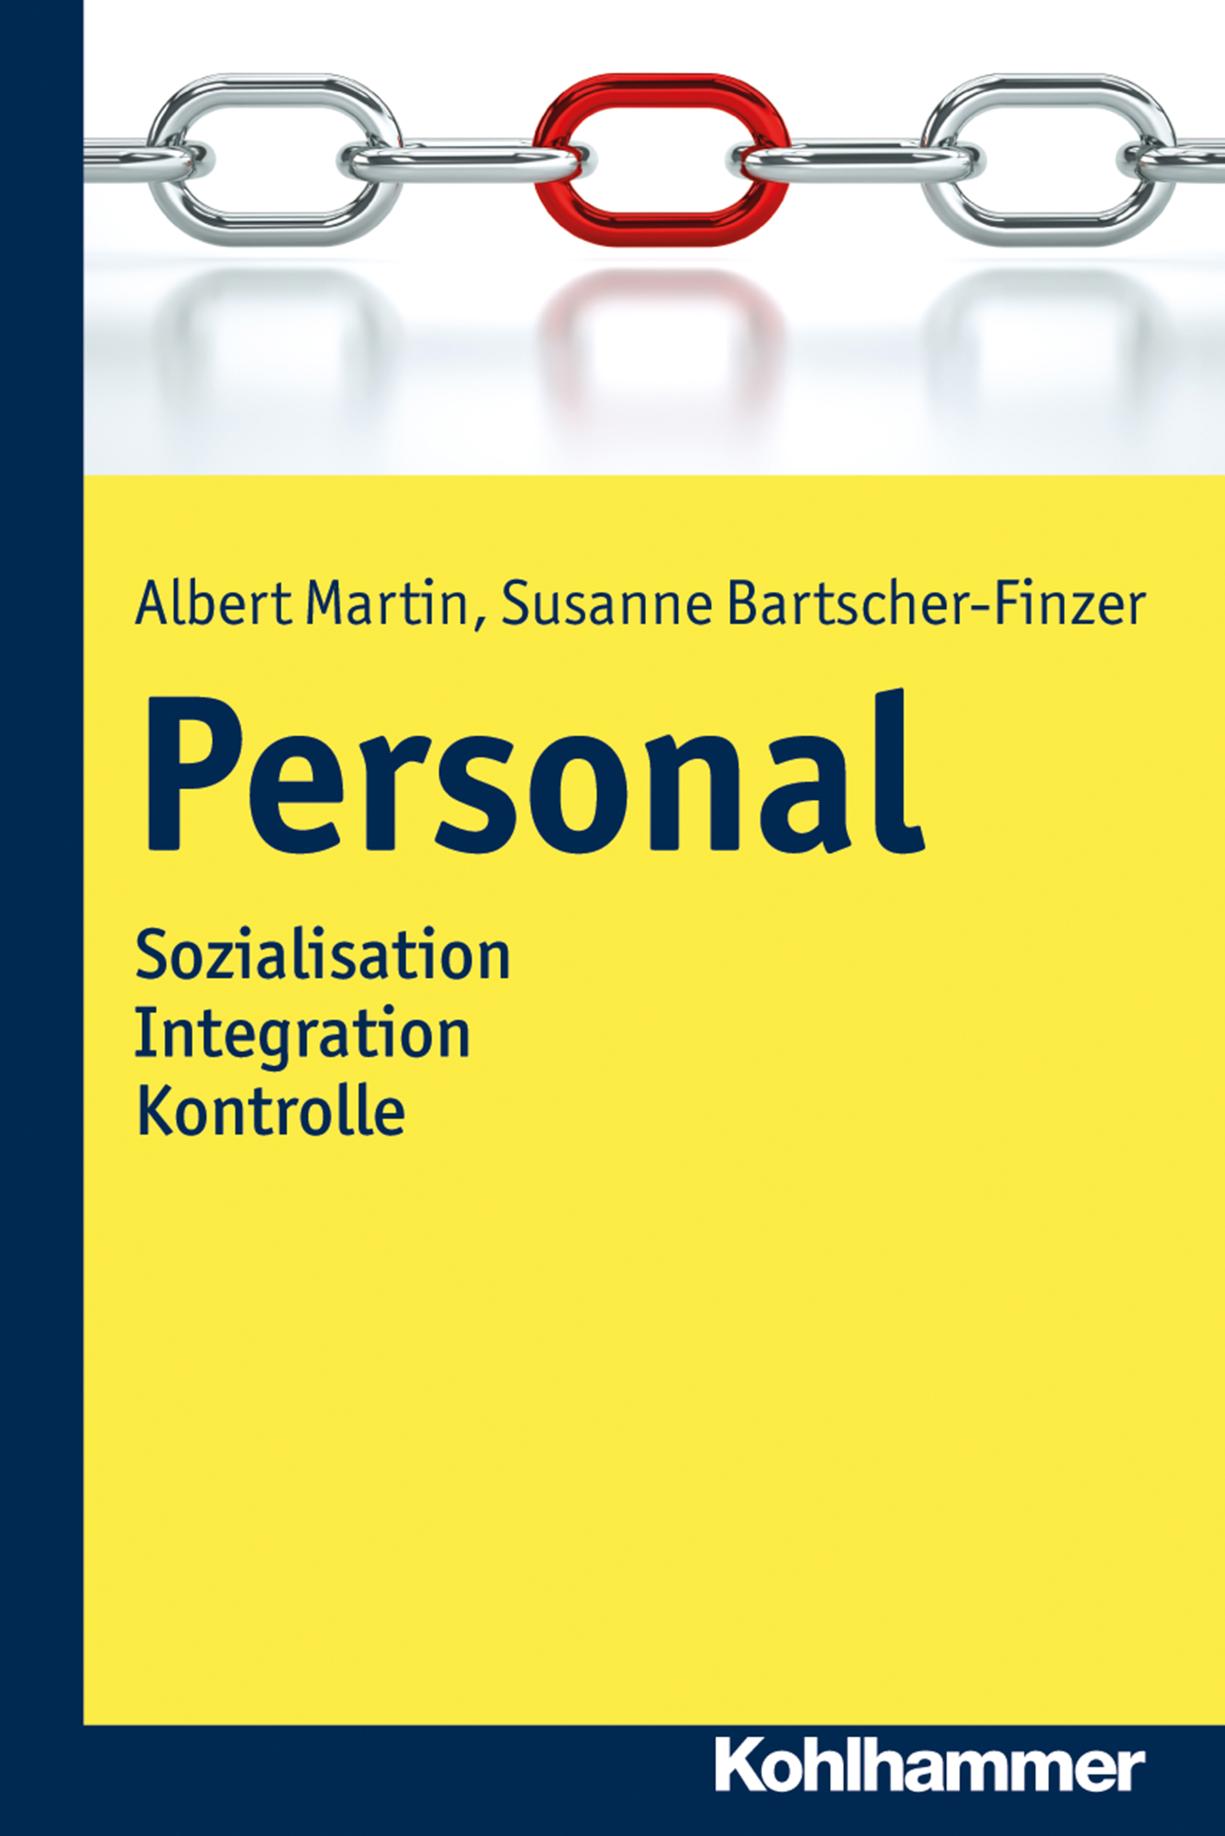 Personal Sozialisation - Integration - Kontrolle